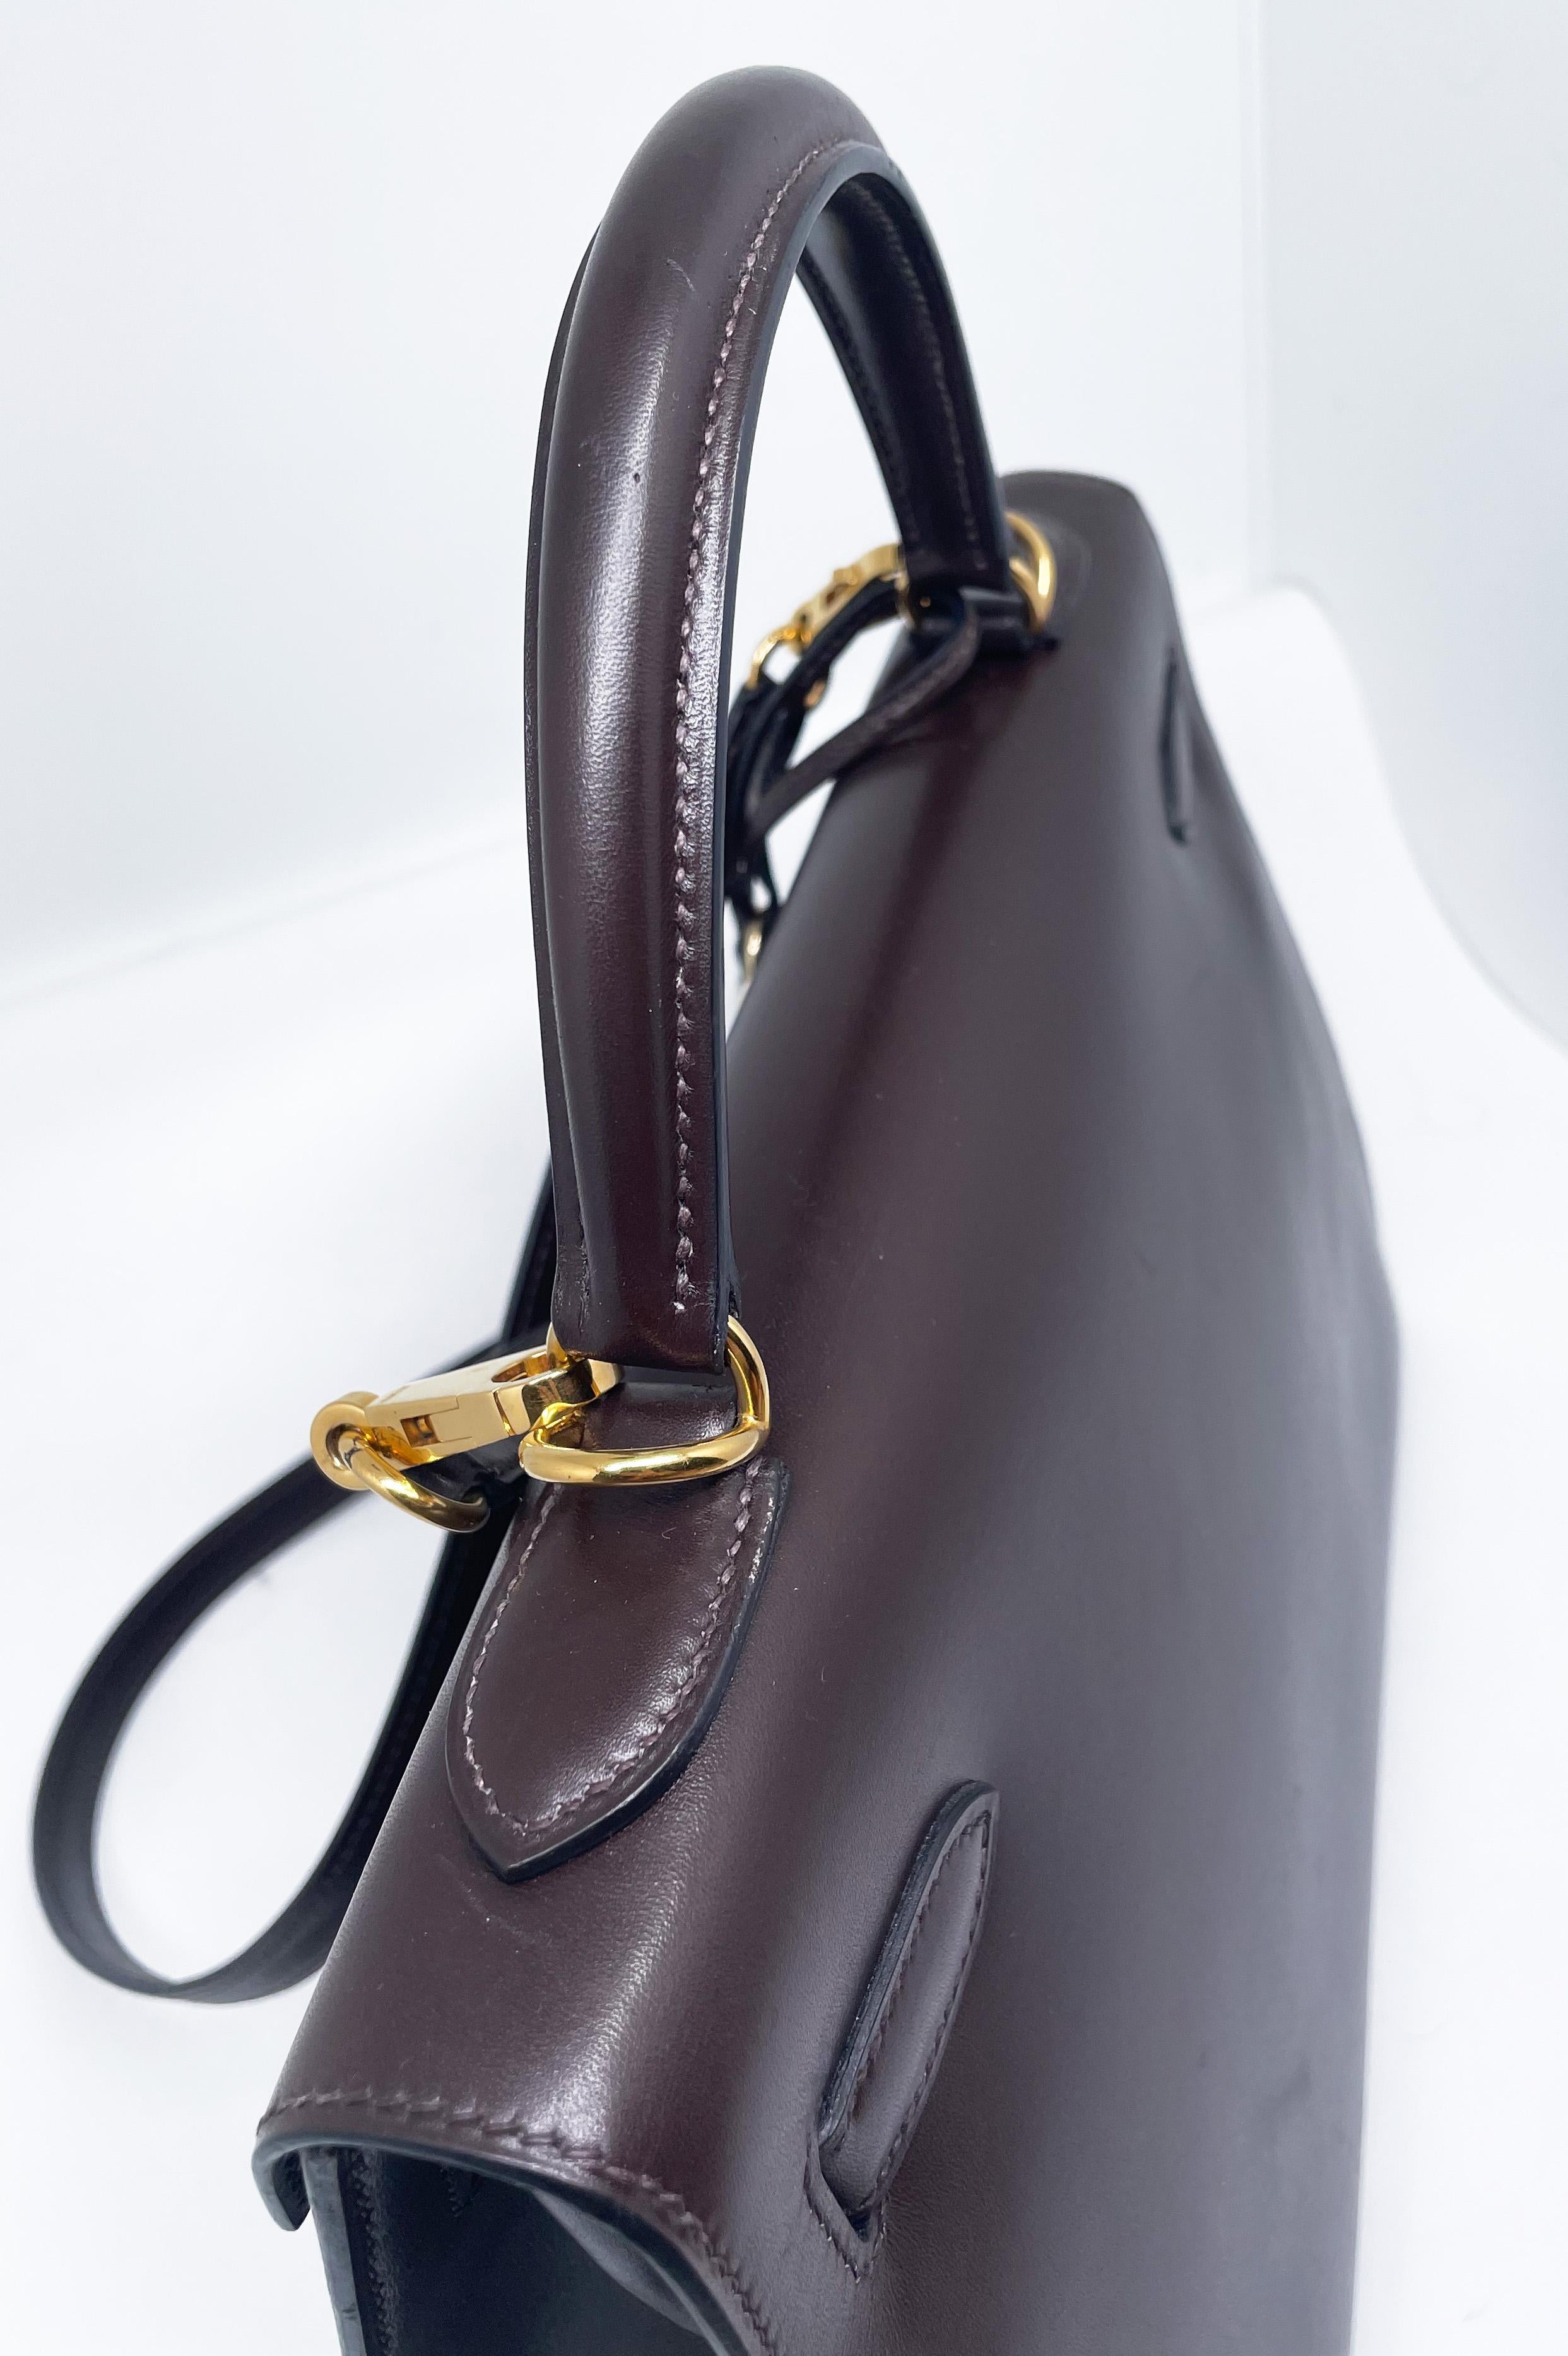 Superb Hermès Kelly saddler handbag 32 cm in brown box 2